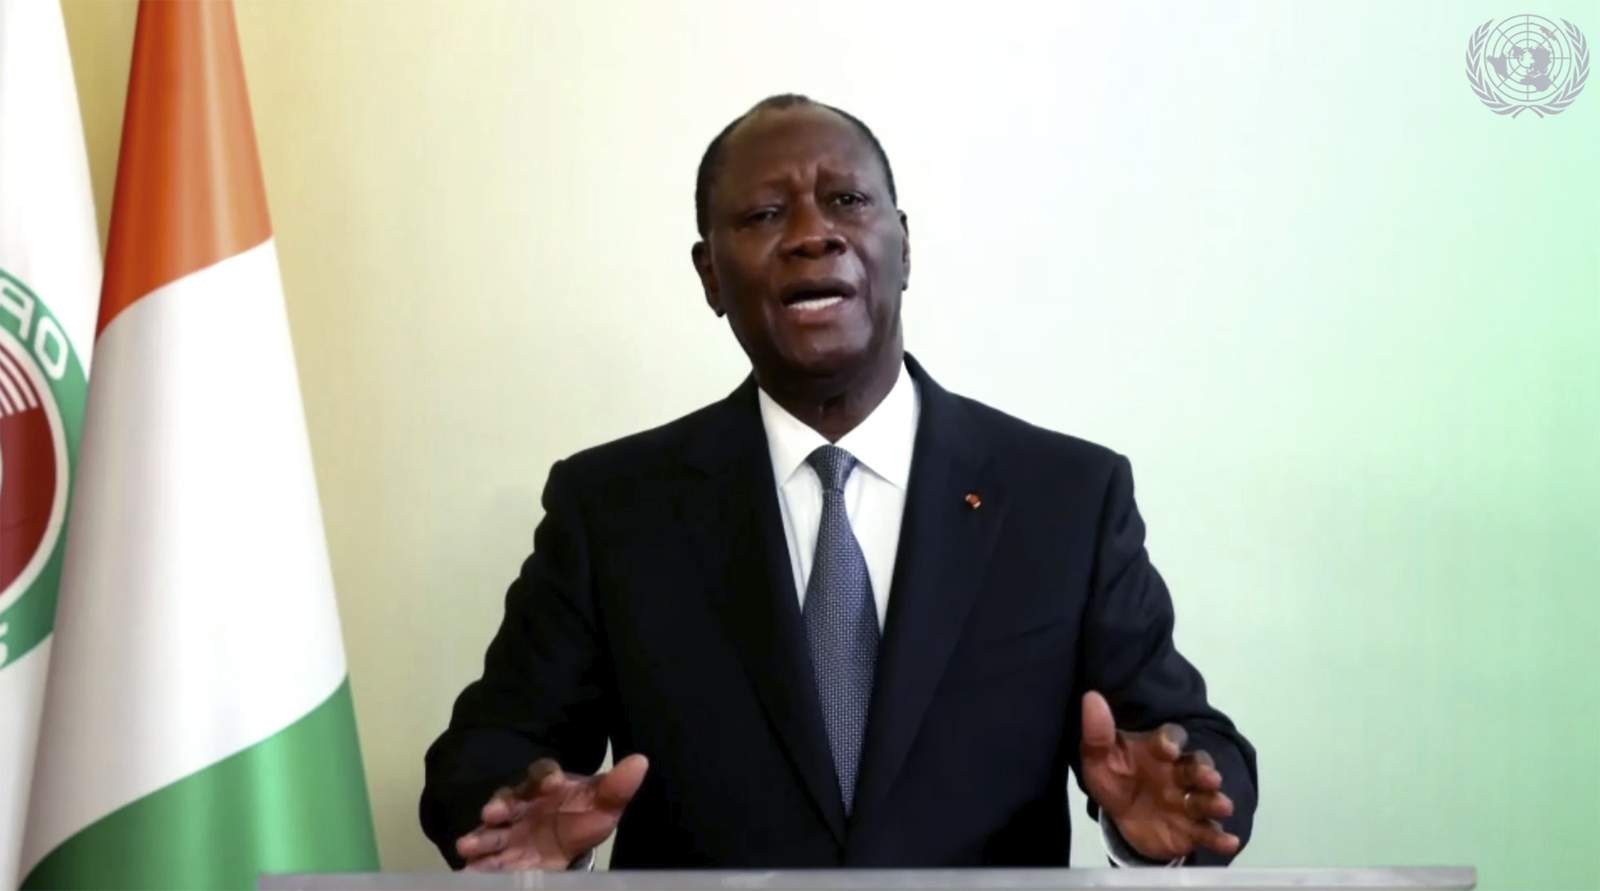 At UN, Africa urges fiscal help against virus ‘apocalypse’